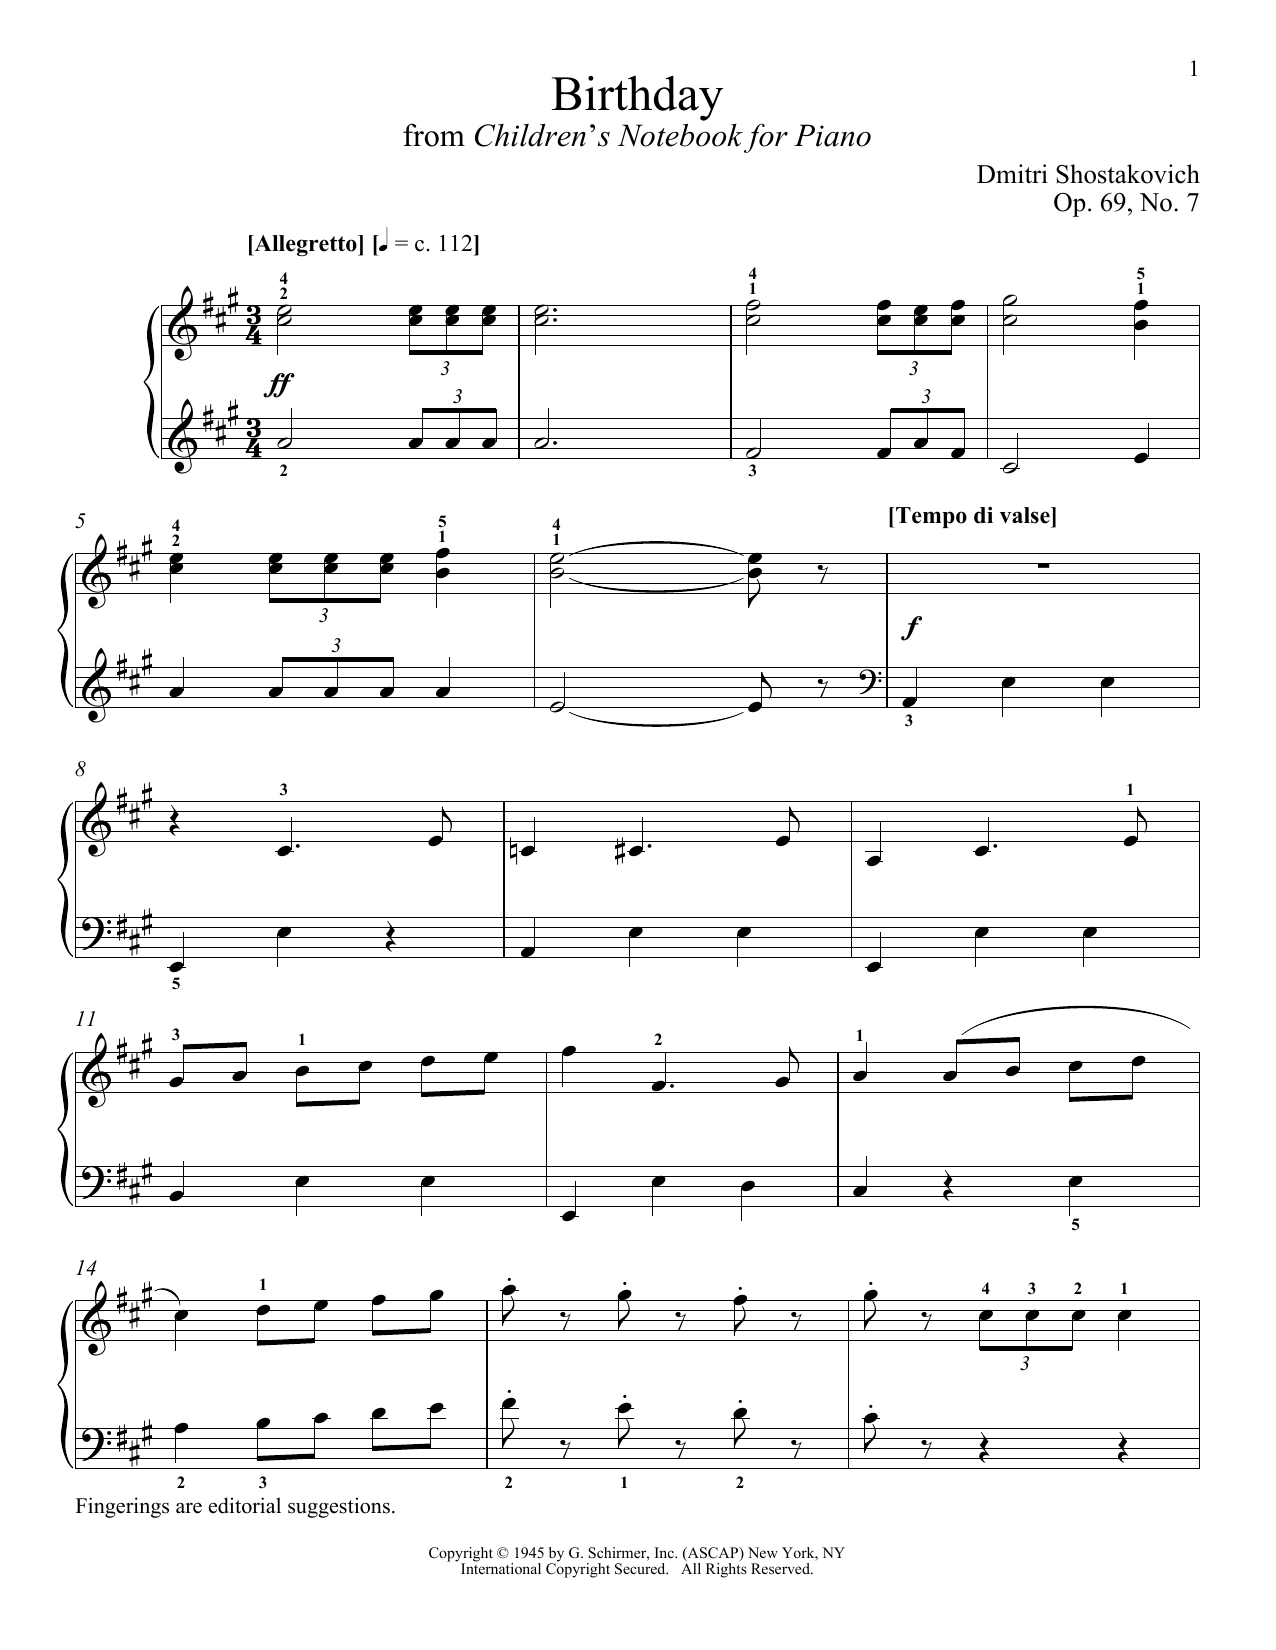 Dmitri Shostakovich Birthday Sheet Music Notes & Chords for Piano - Download or Print PDF